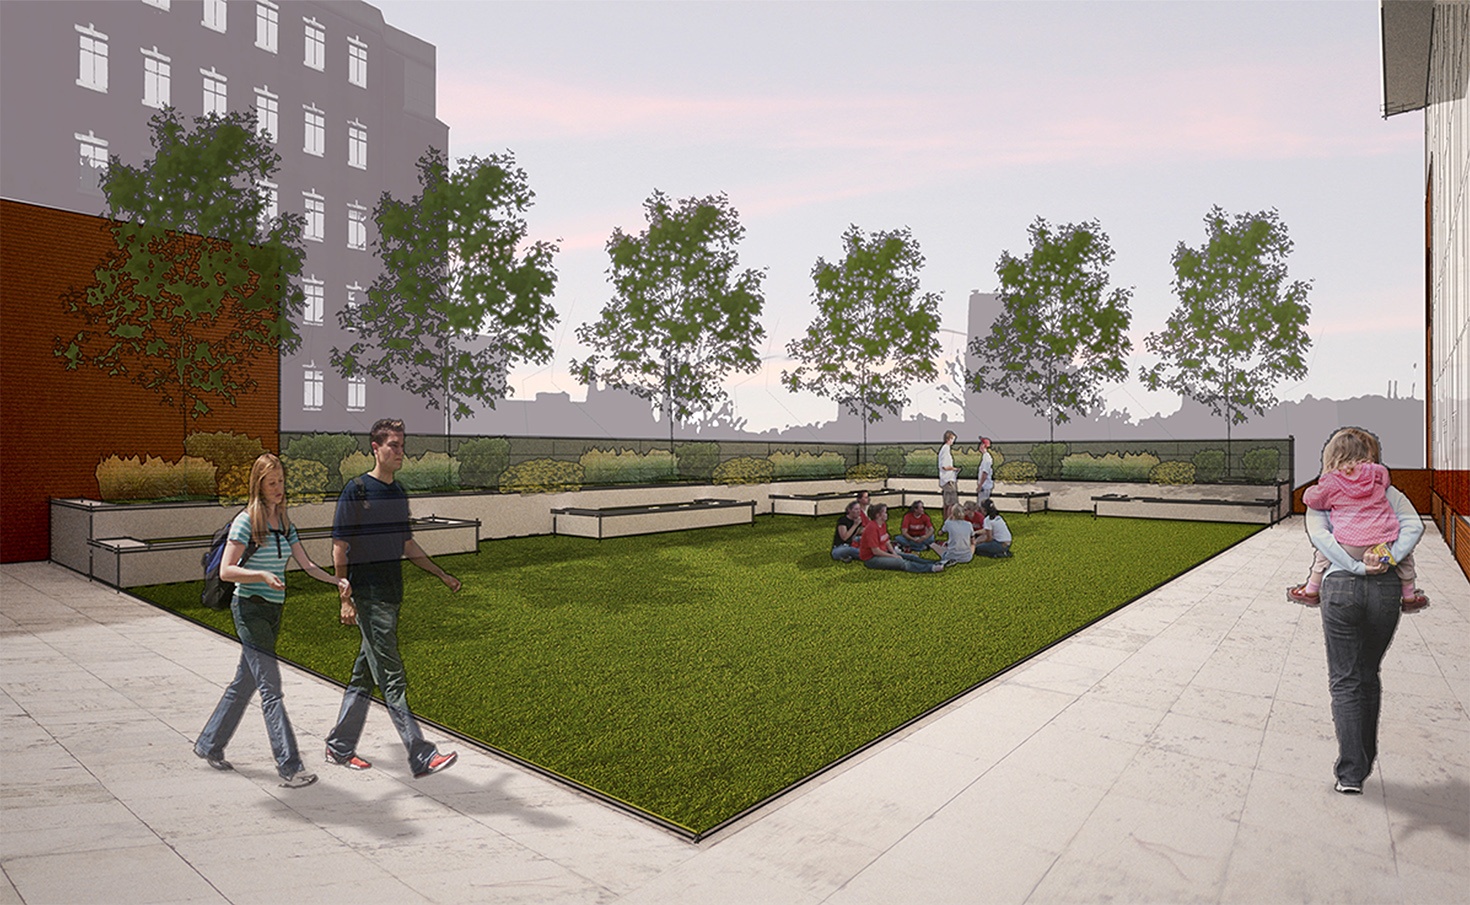 Rooftop Courtyard - Sculpture Garden and Performance Space for an Urban High School